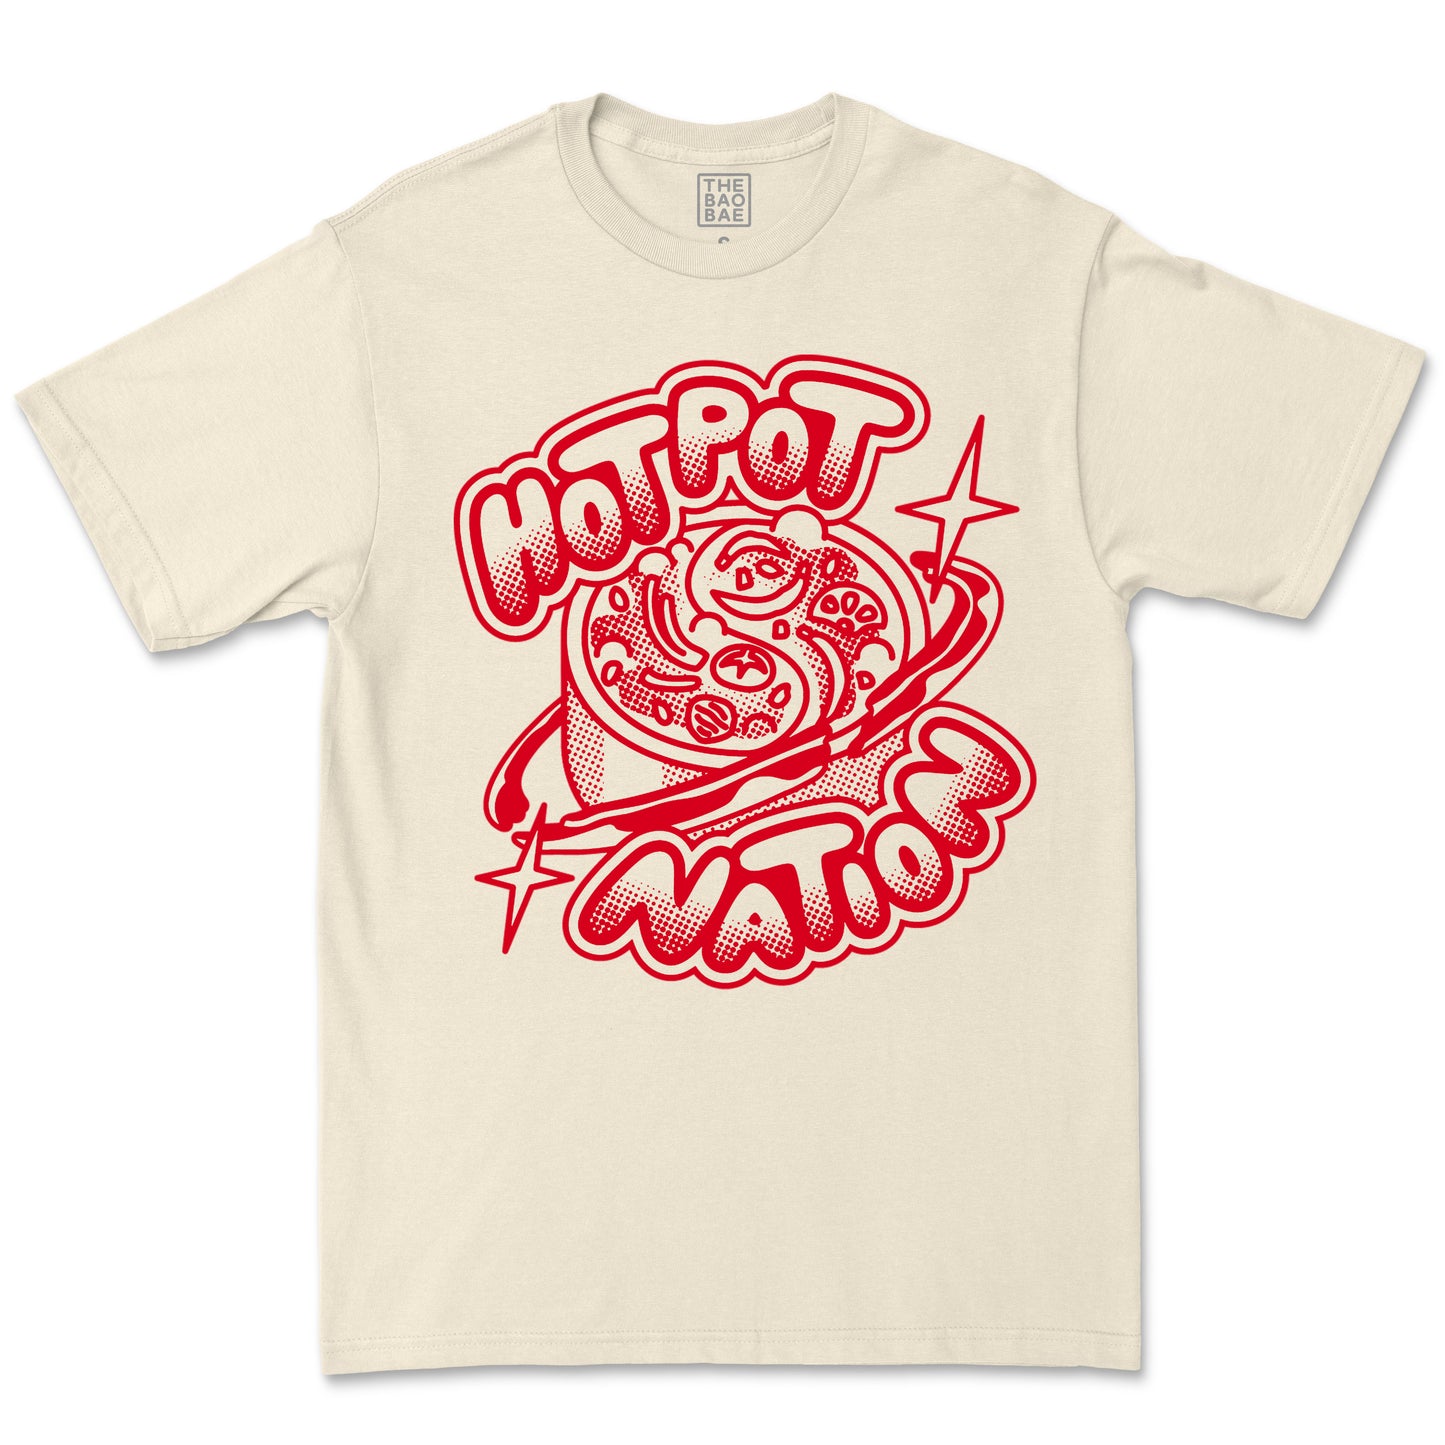 Hotpot Nation Short Sleeve T-Shirt Cream